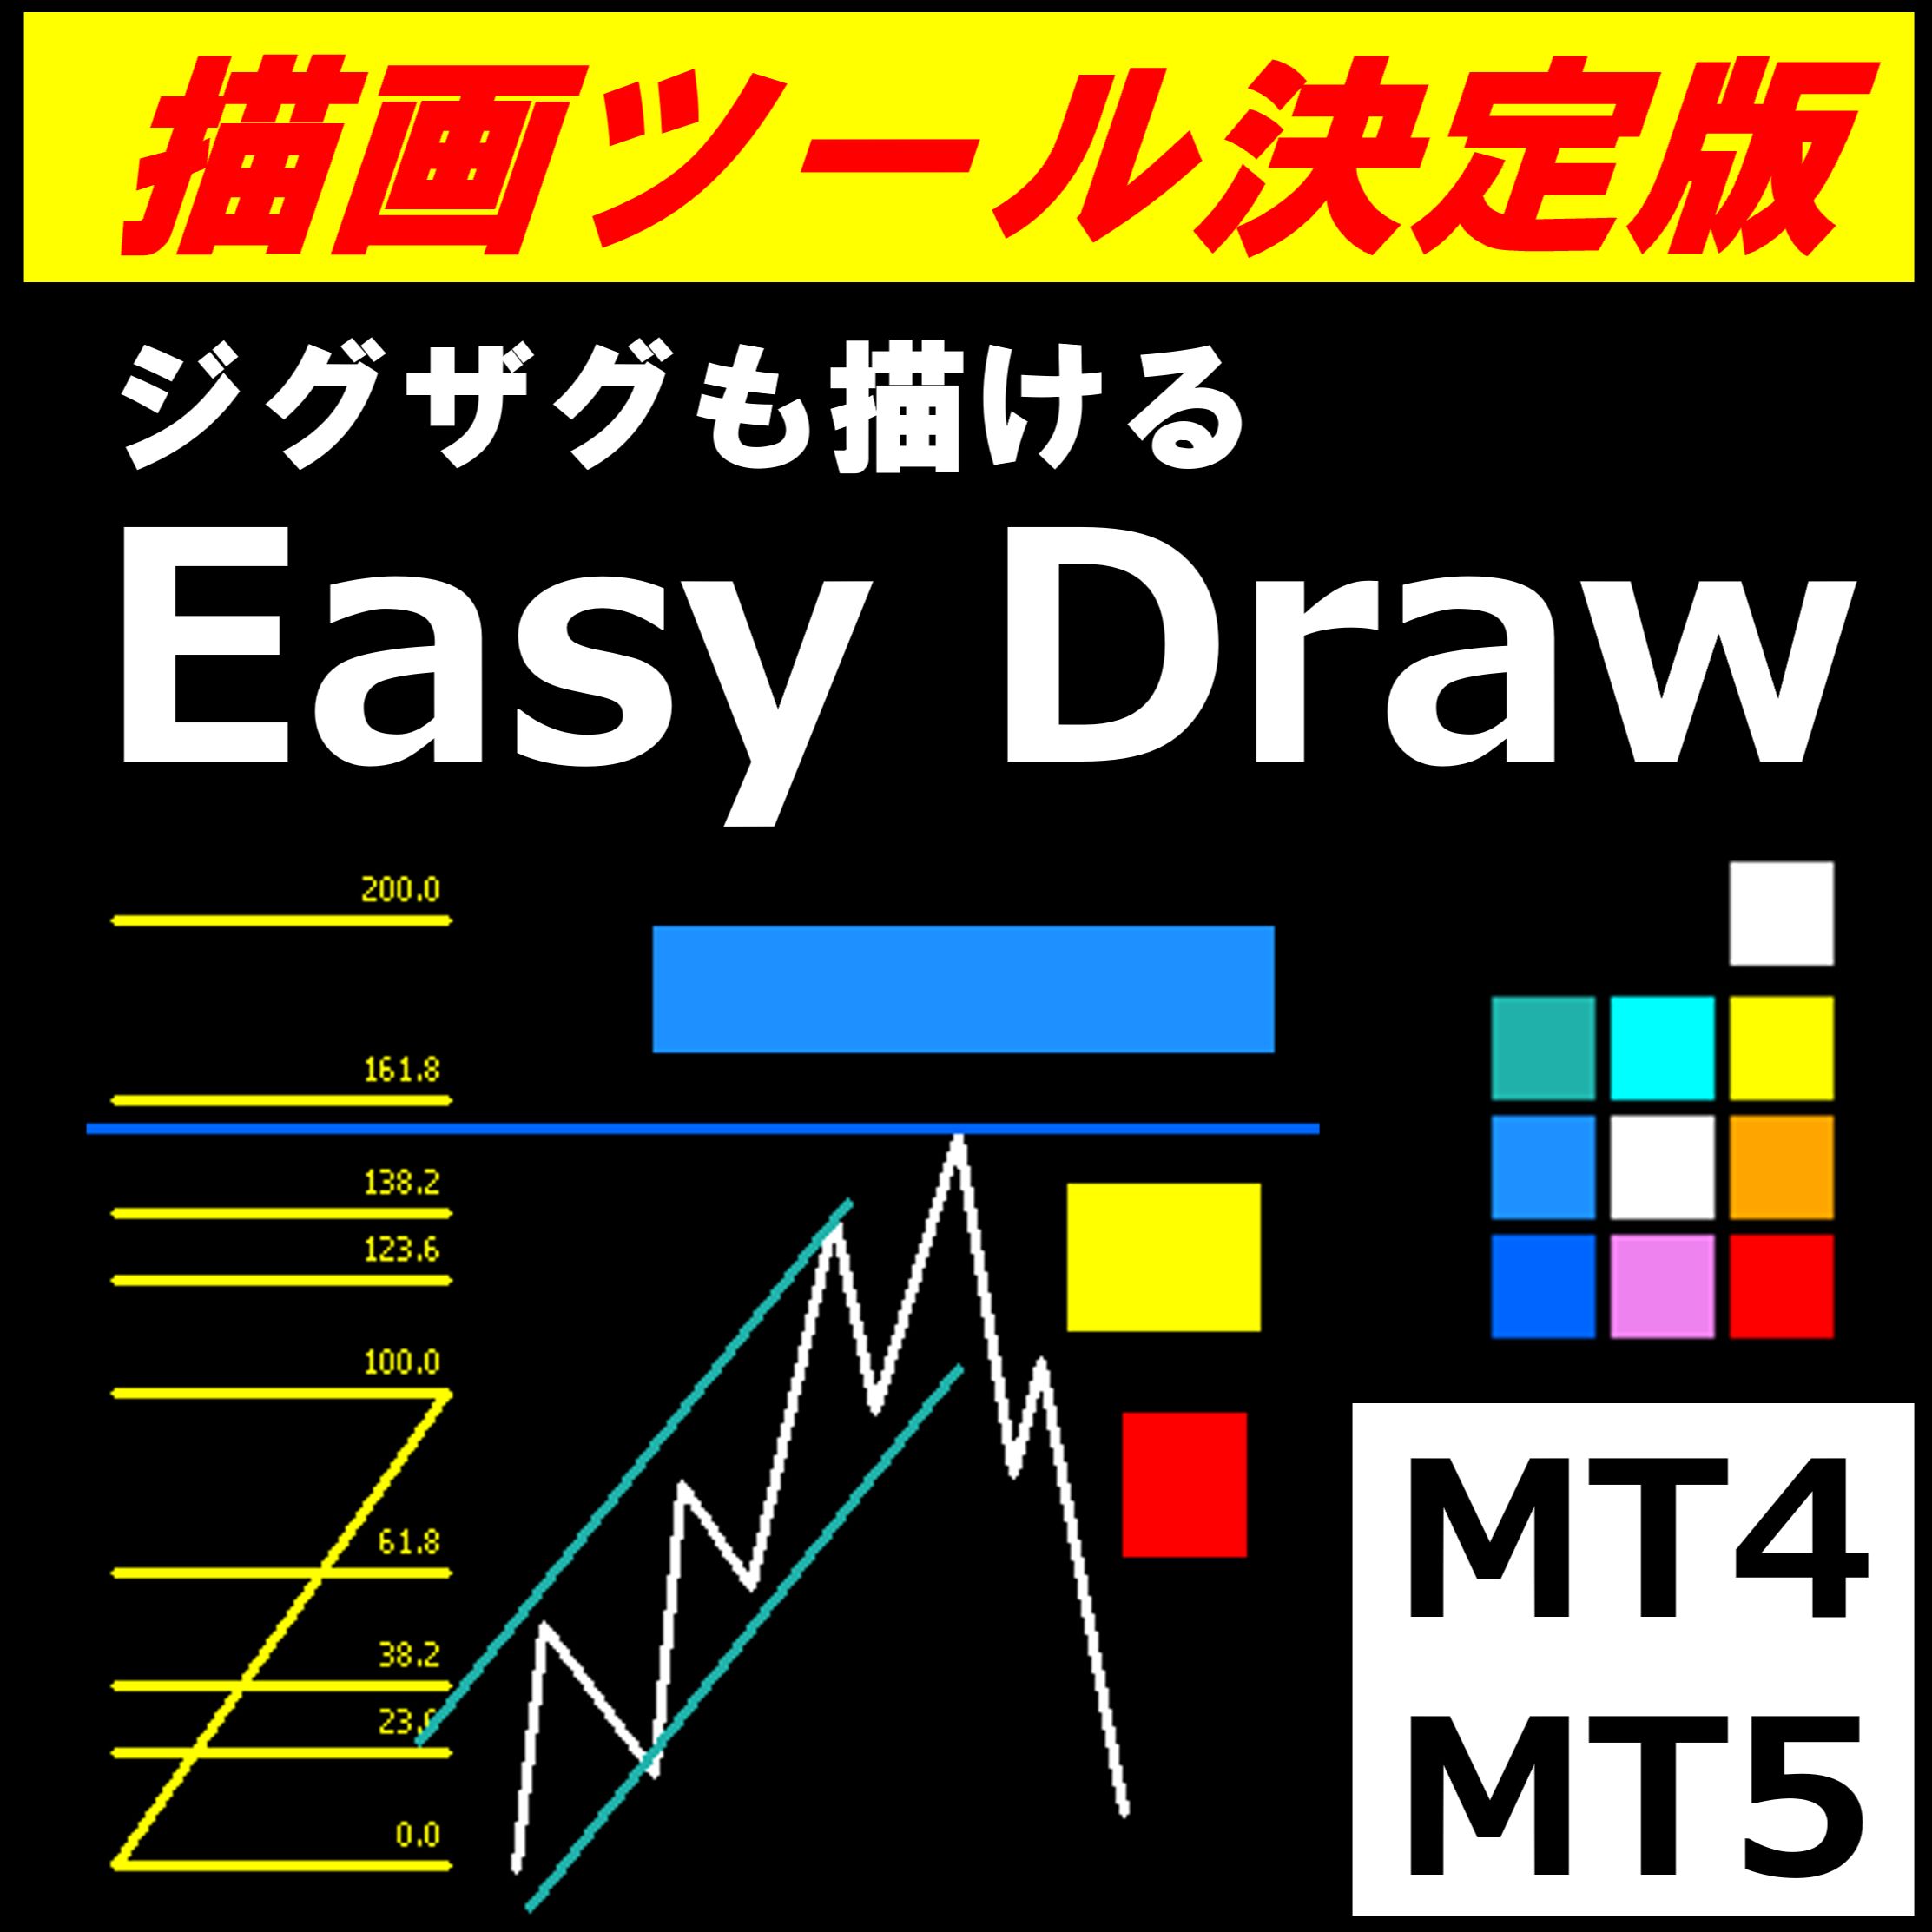 Easy Draw 【ジグザグも描けるショートカット描画】 Indicators/E-books